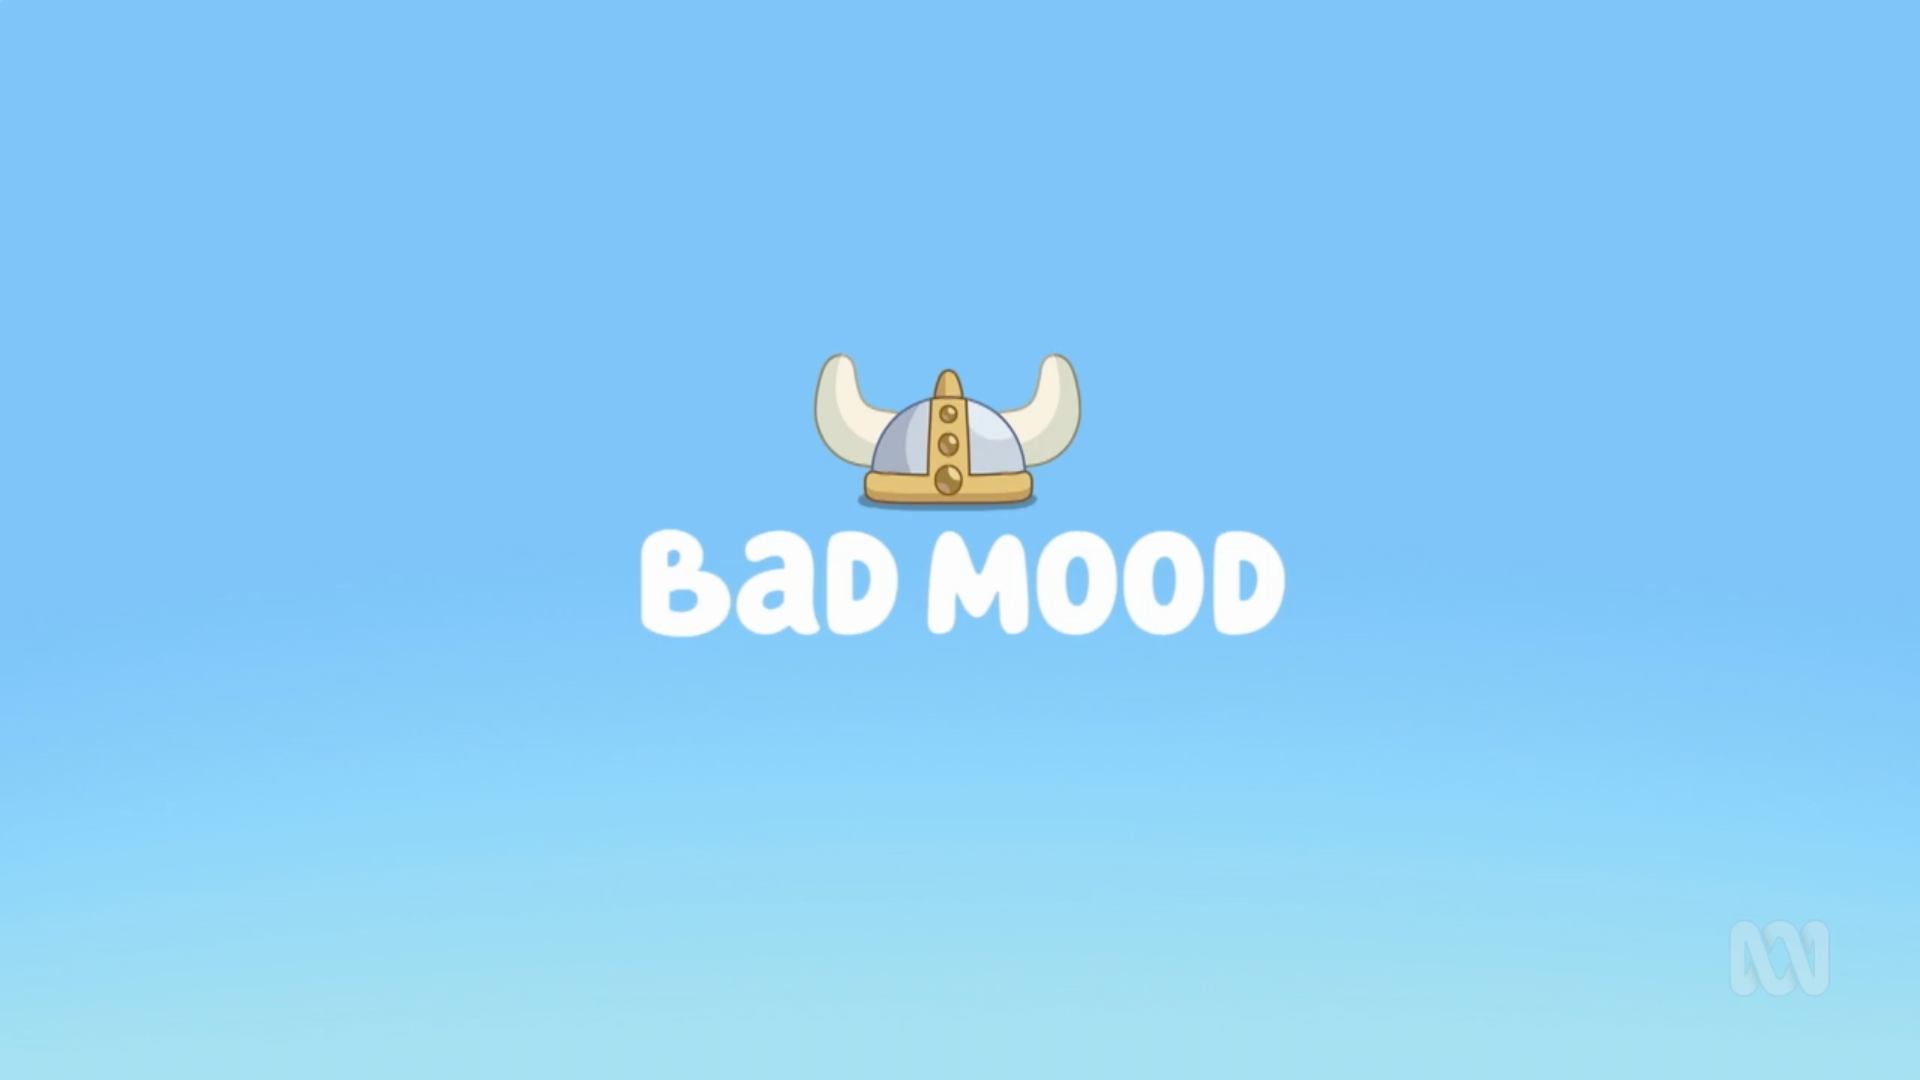 bad mood images